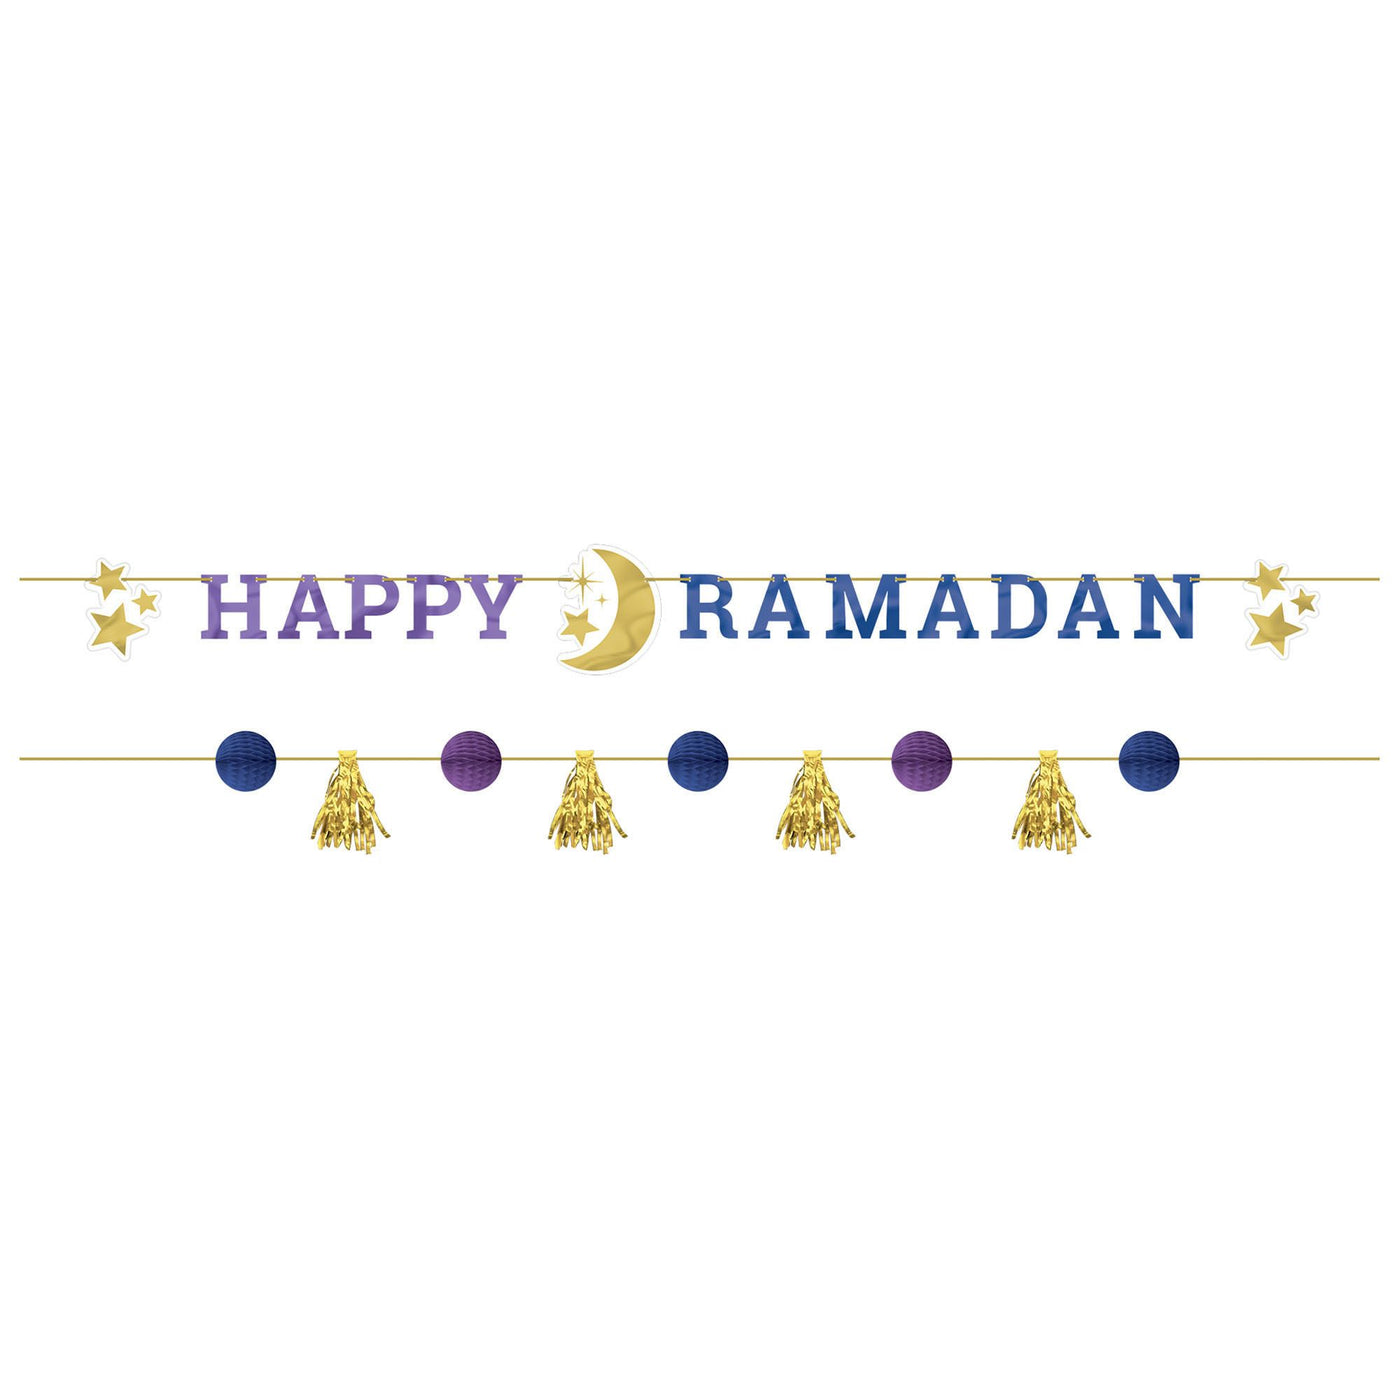 Happy Ramadan Letter Banner Kit